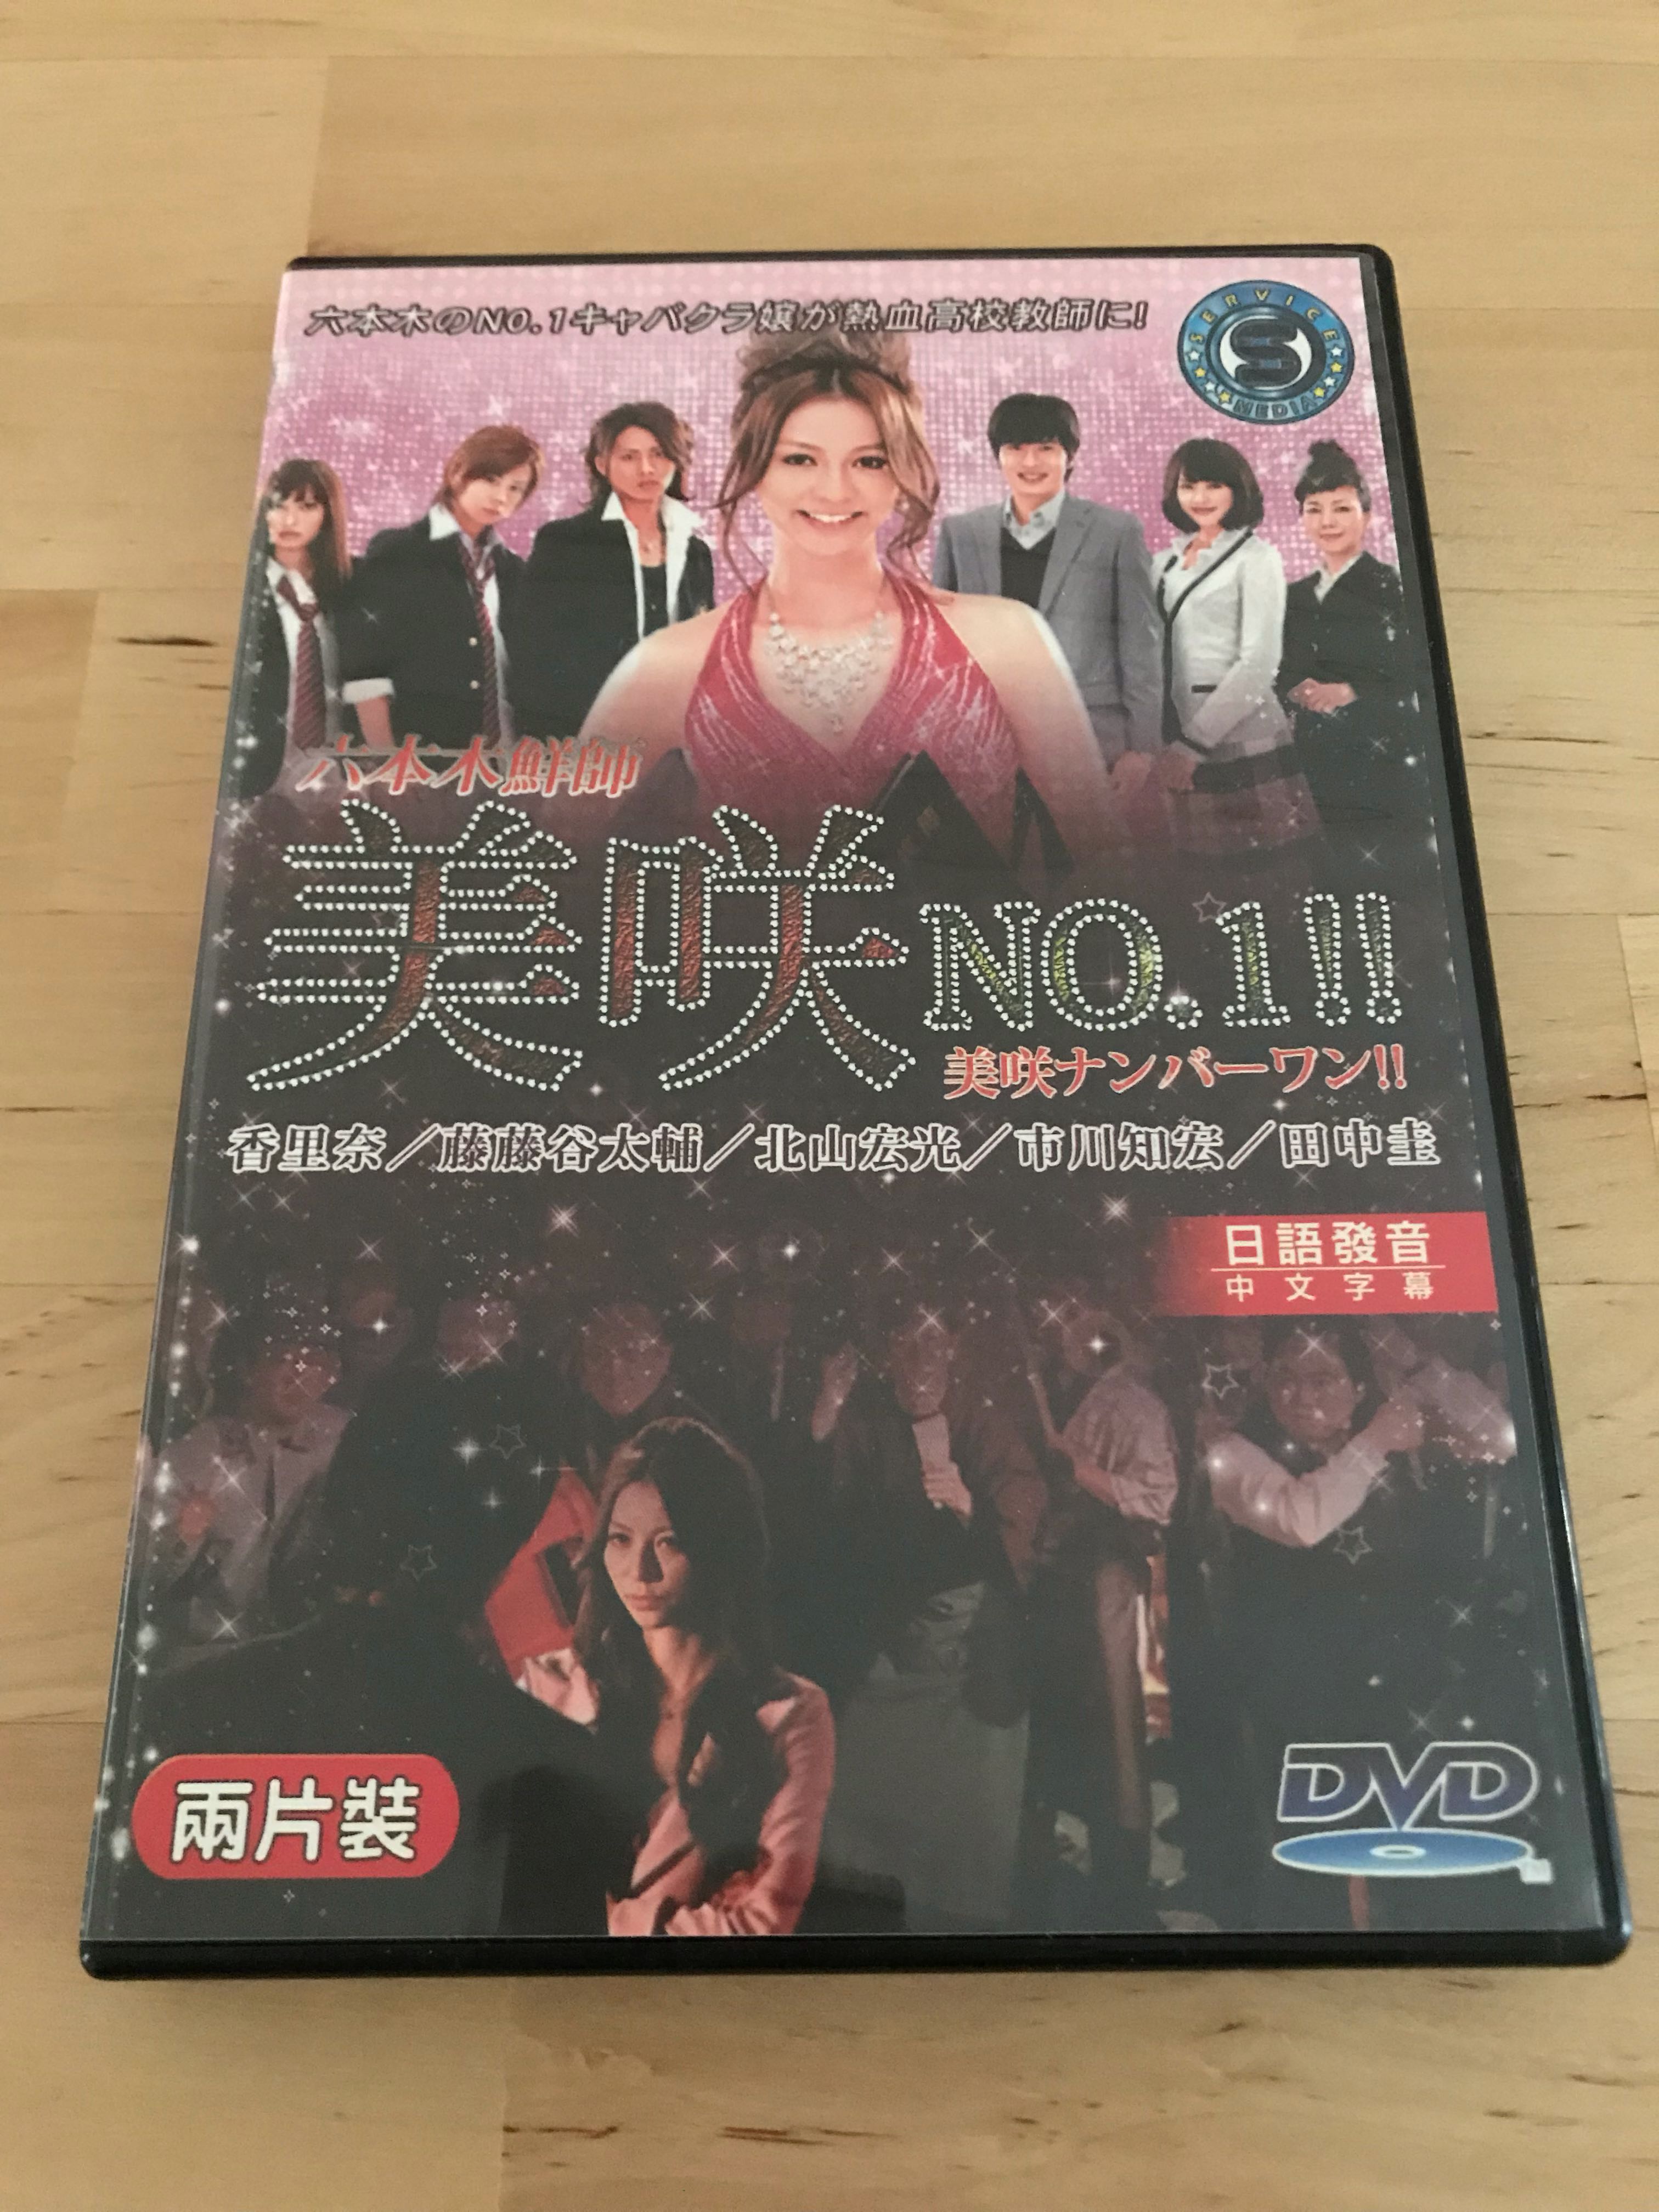 Japanese Drama Jdrama Dvd 日剧美咲no 1 香里奈 Music Media Cds Dvds Other Media On Carousell